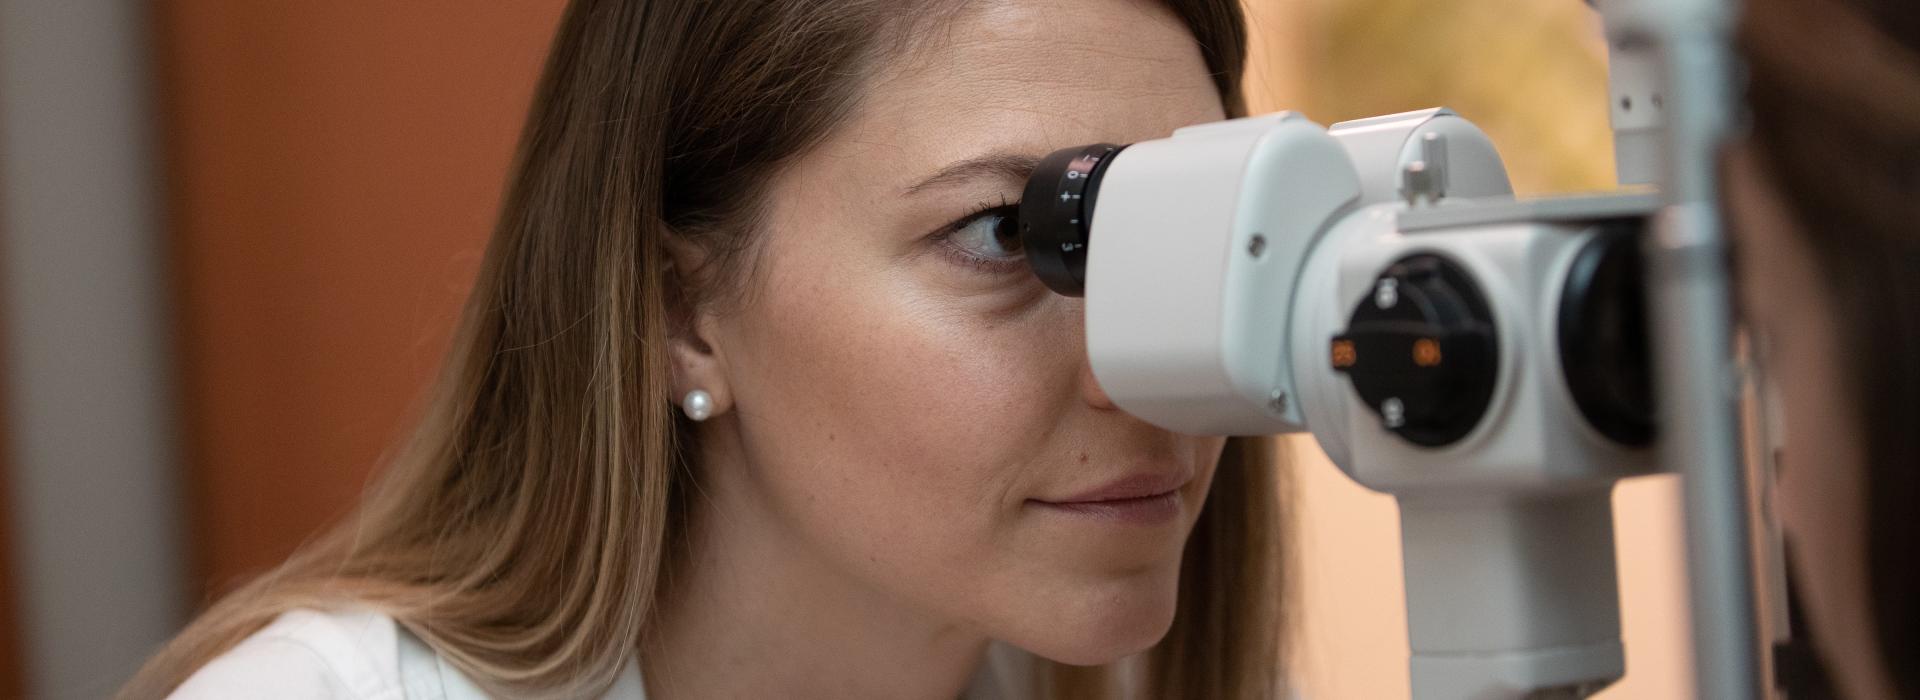 SCCO optometry student performing eye exam